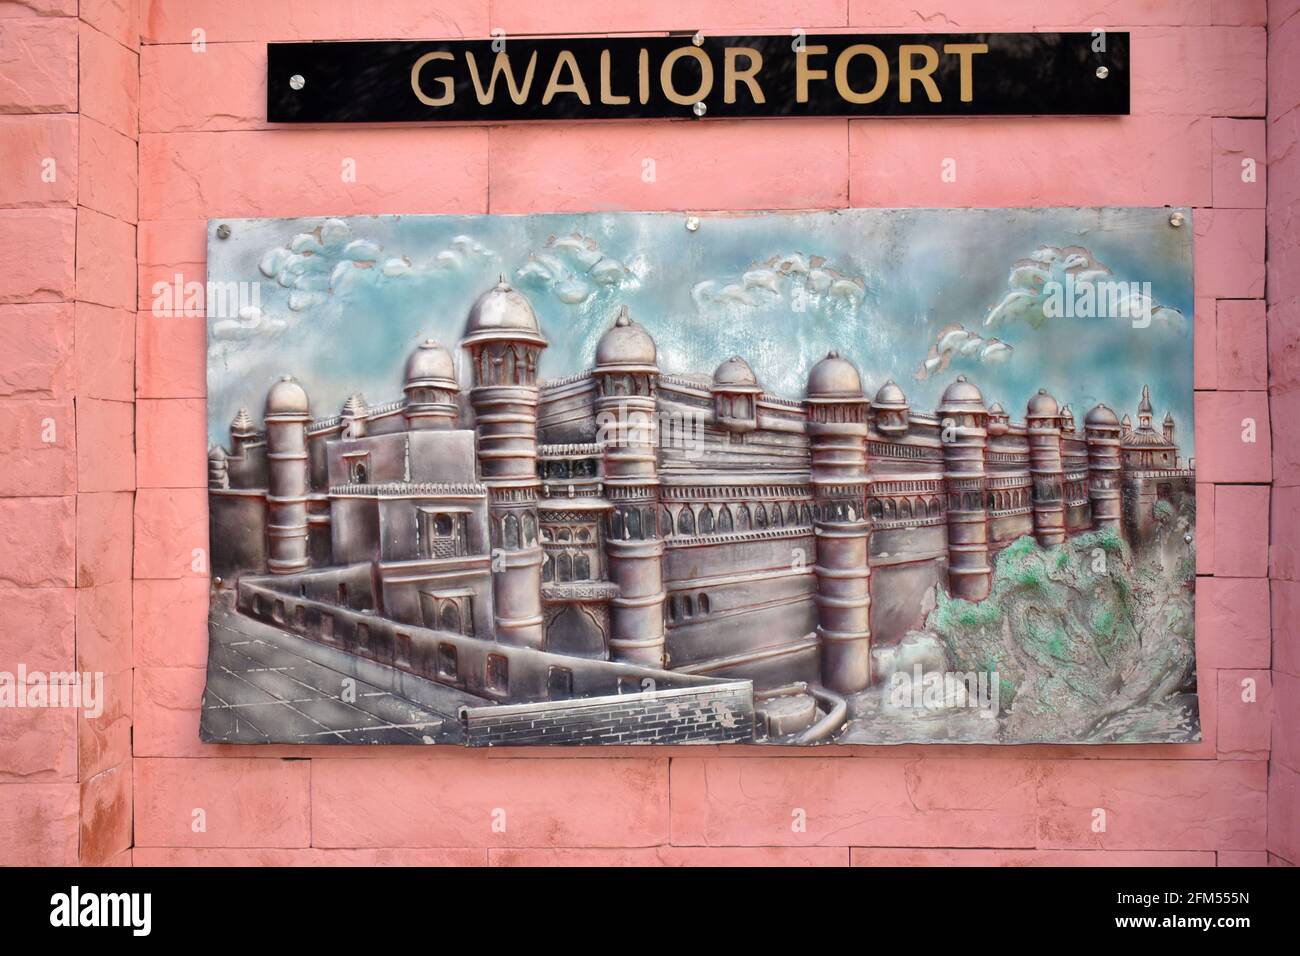 Gwalior Fort Skulptur Wandrelief im Museum - National war Memorial Southern Command Pune, Maharashtra, Indien Stockfoto